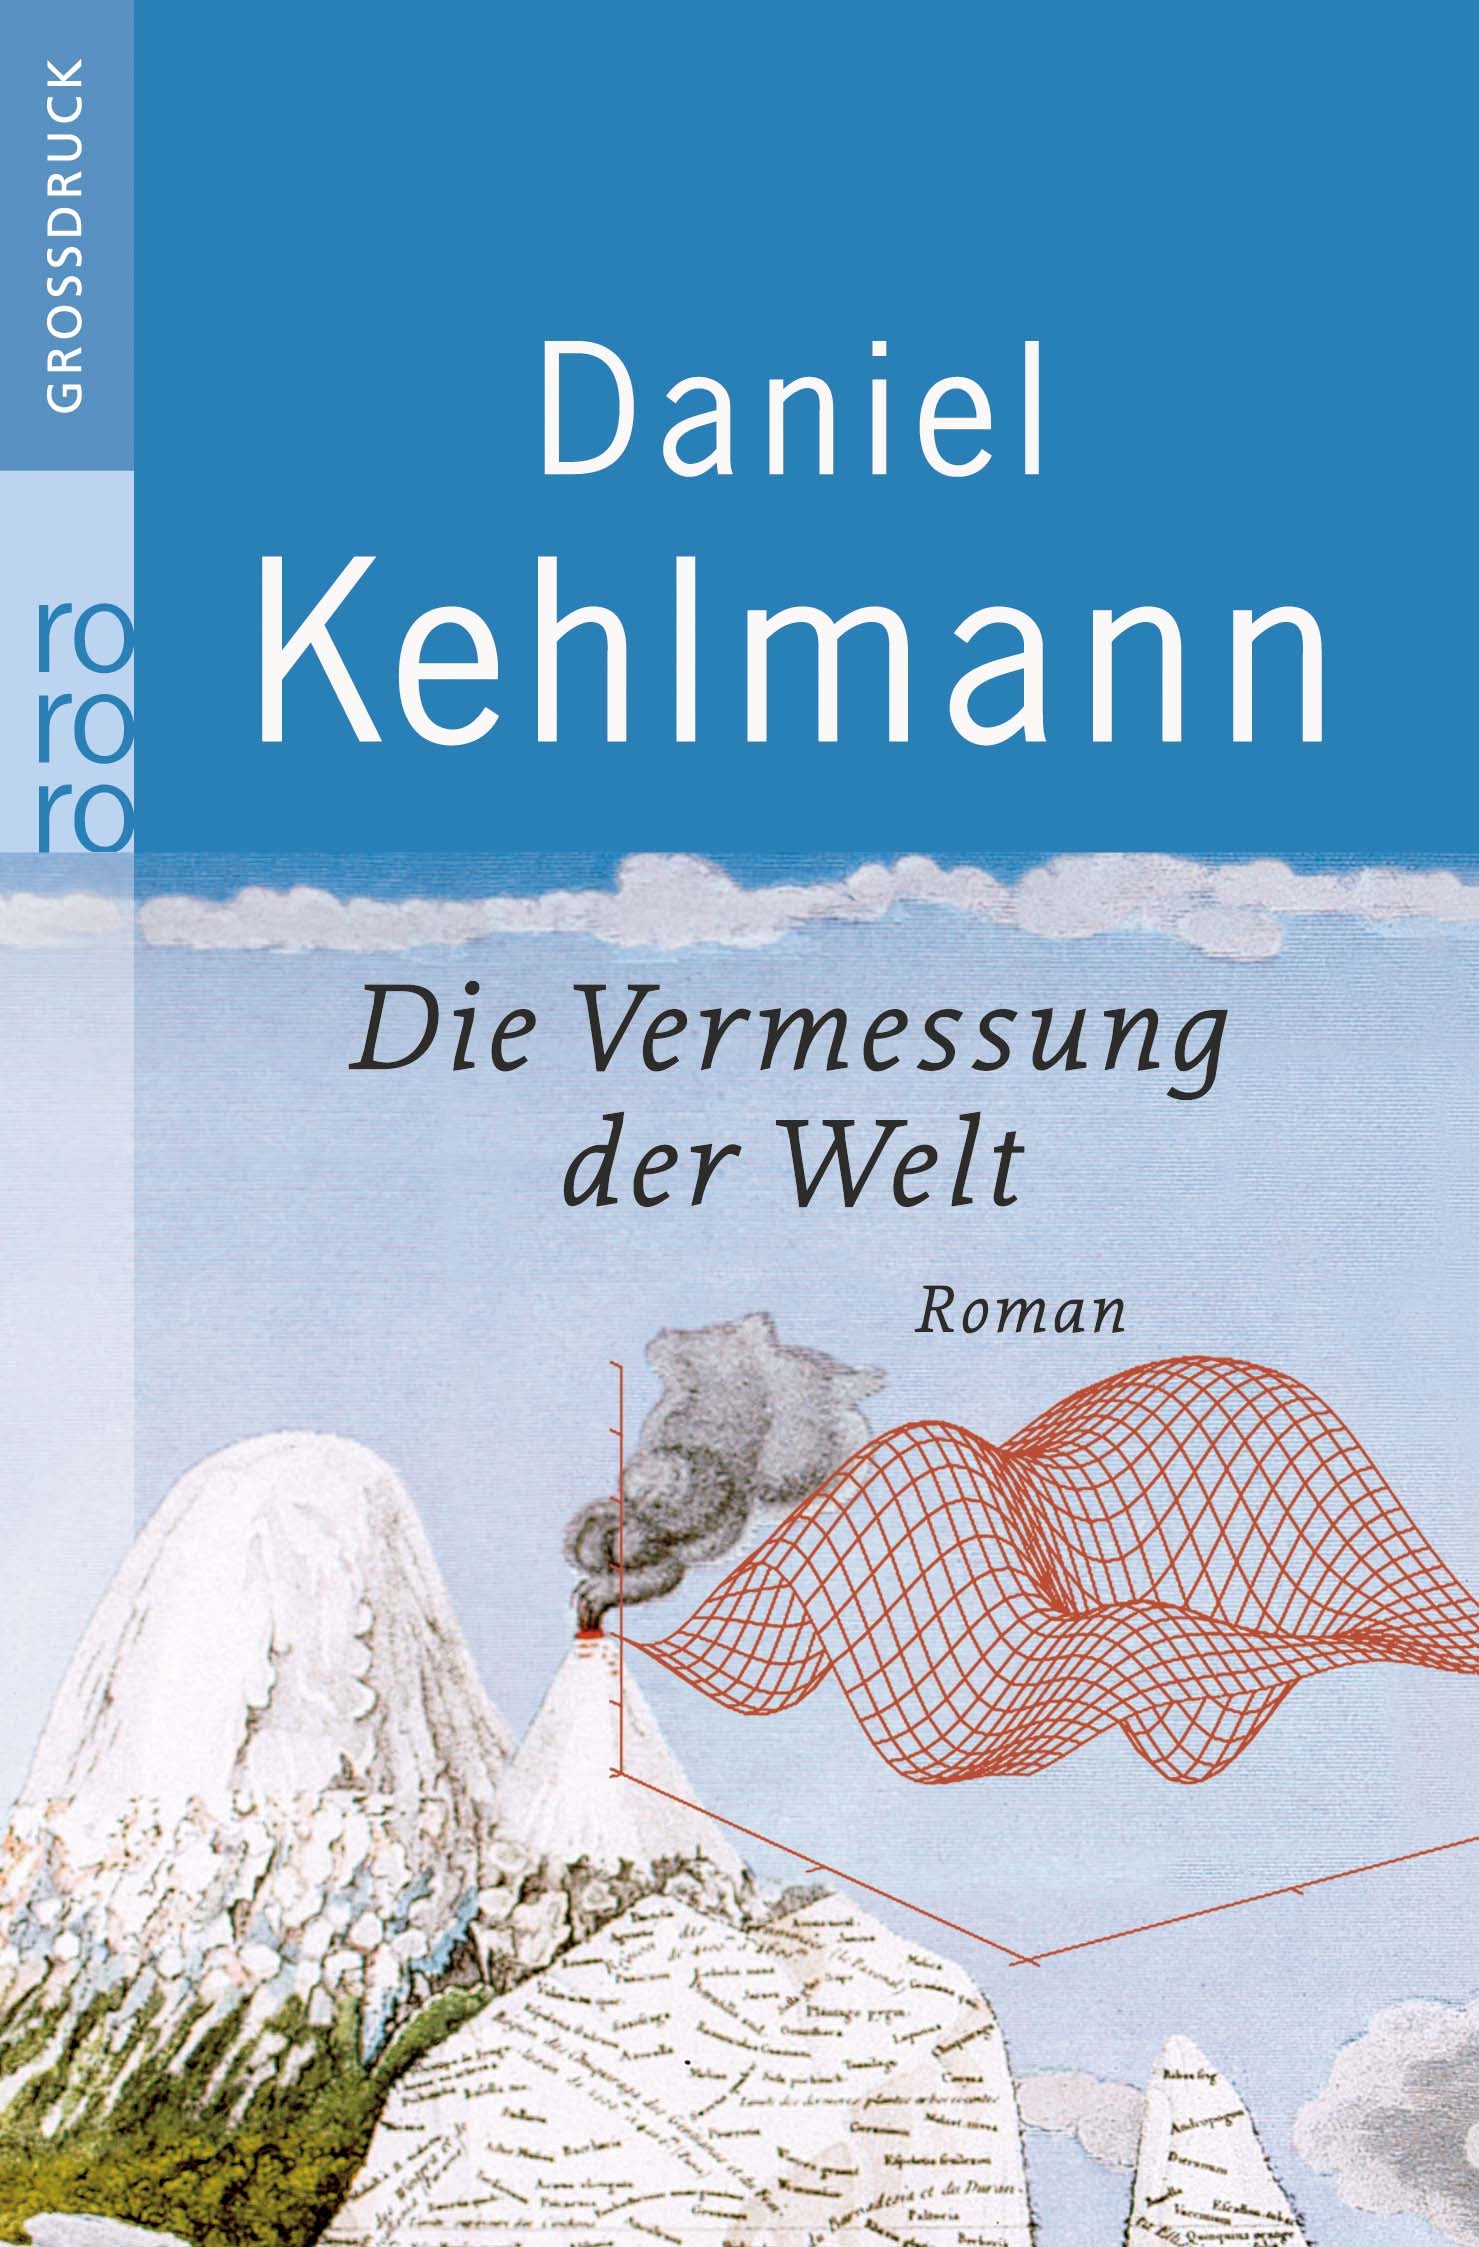 German cover art for Daniel Kehlmann's book, 